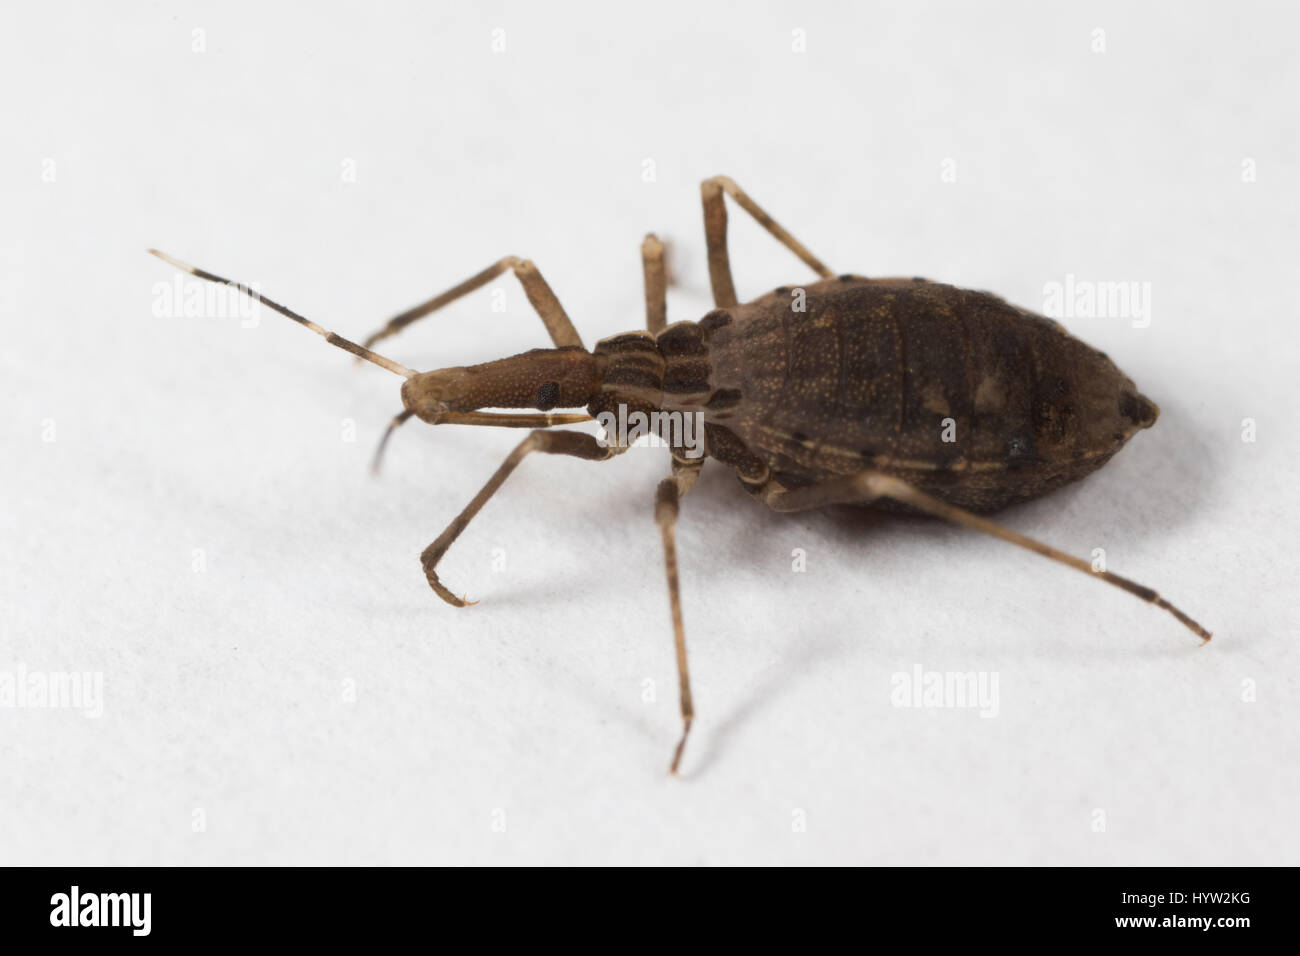 2e stade Rhodnius prolixus (kissing bug) nymphe - l'insecte qui transmet la maladie de Chagas Banque D'Images